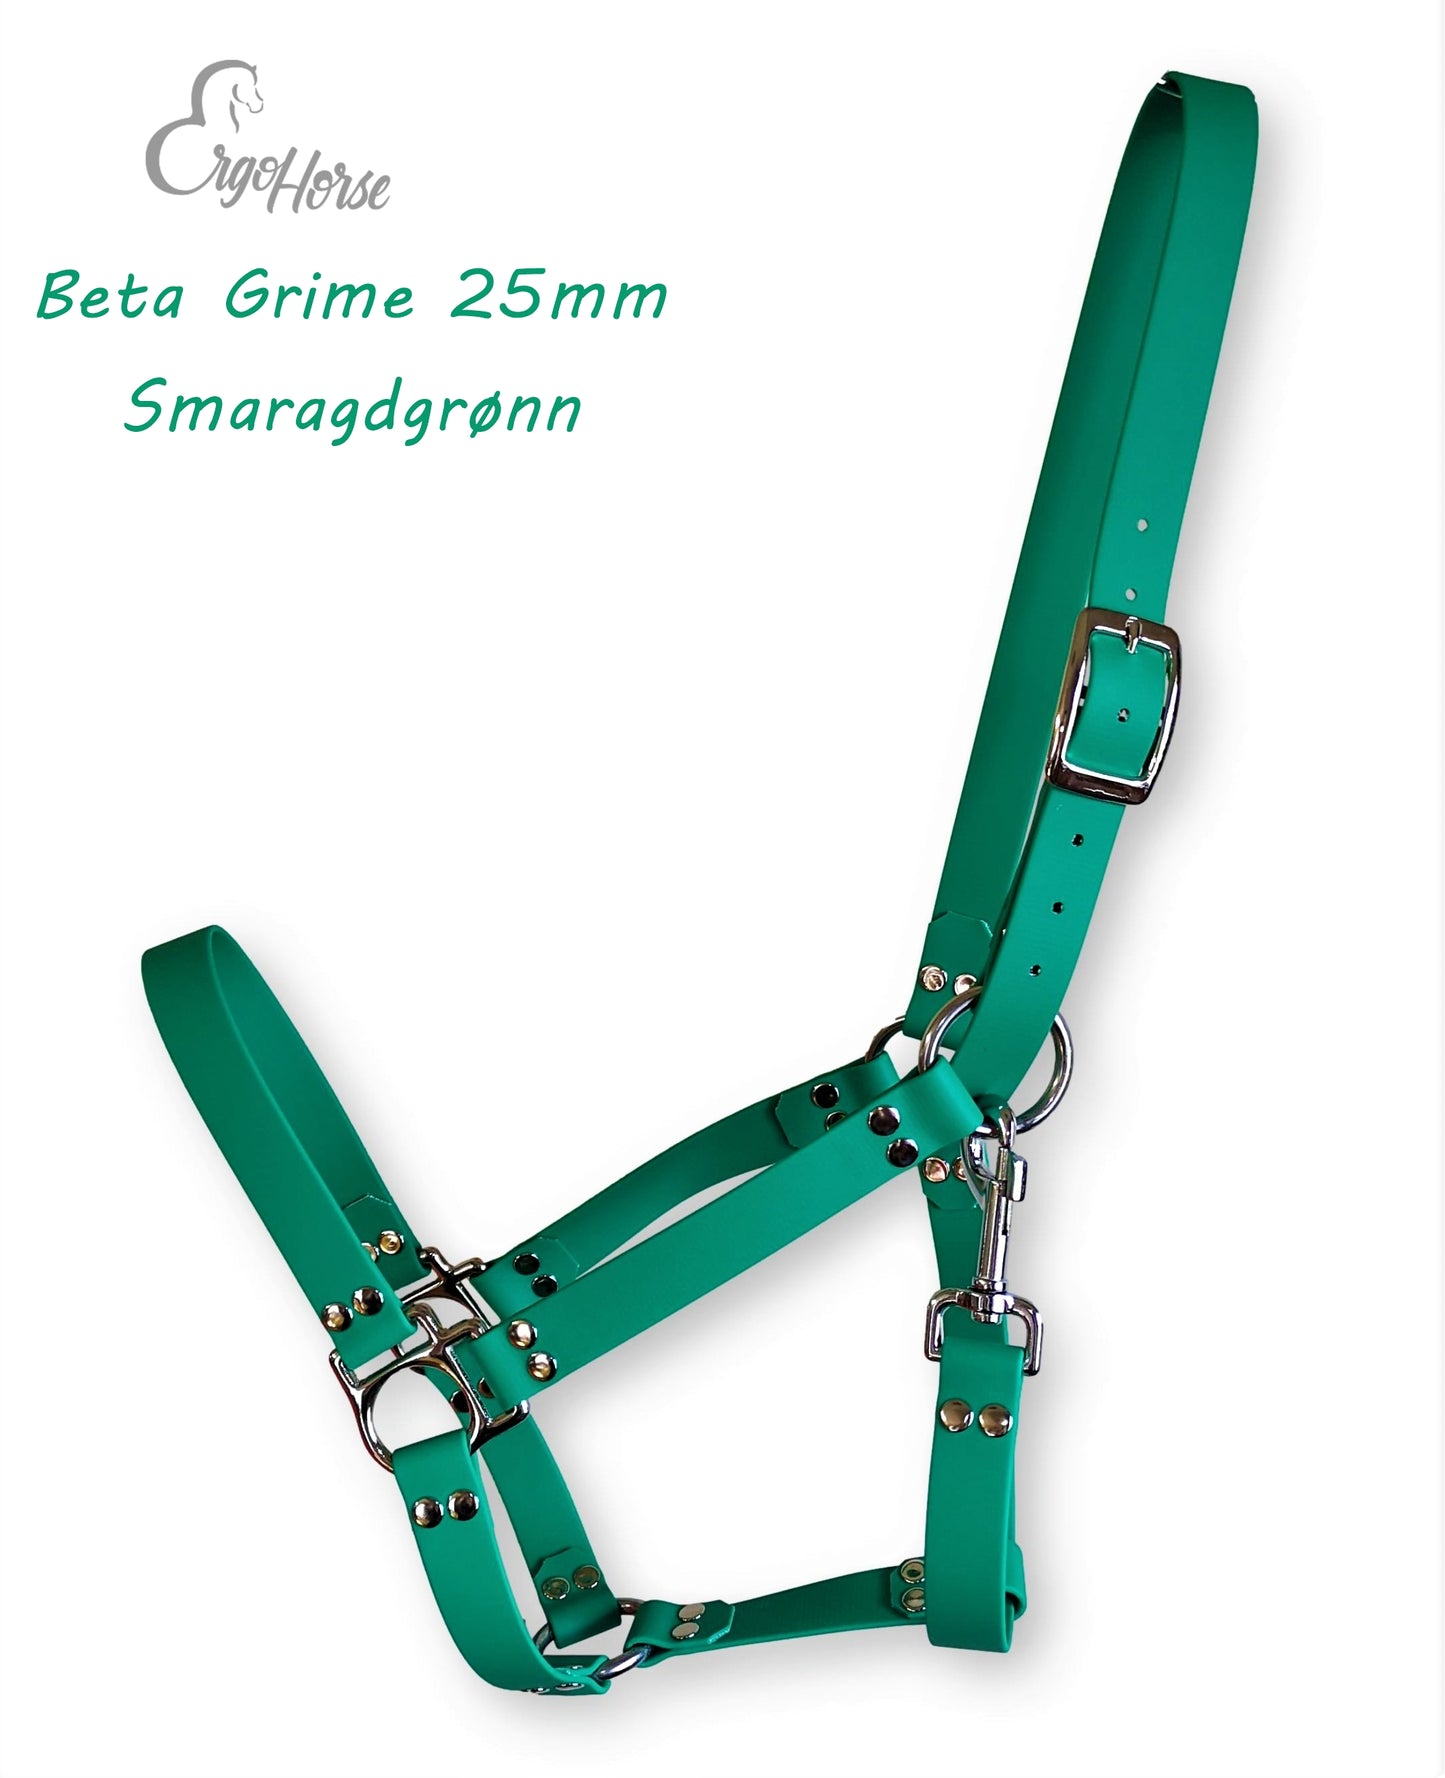 Standard beta grime 25mm